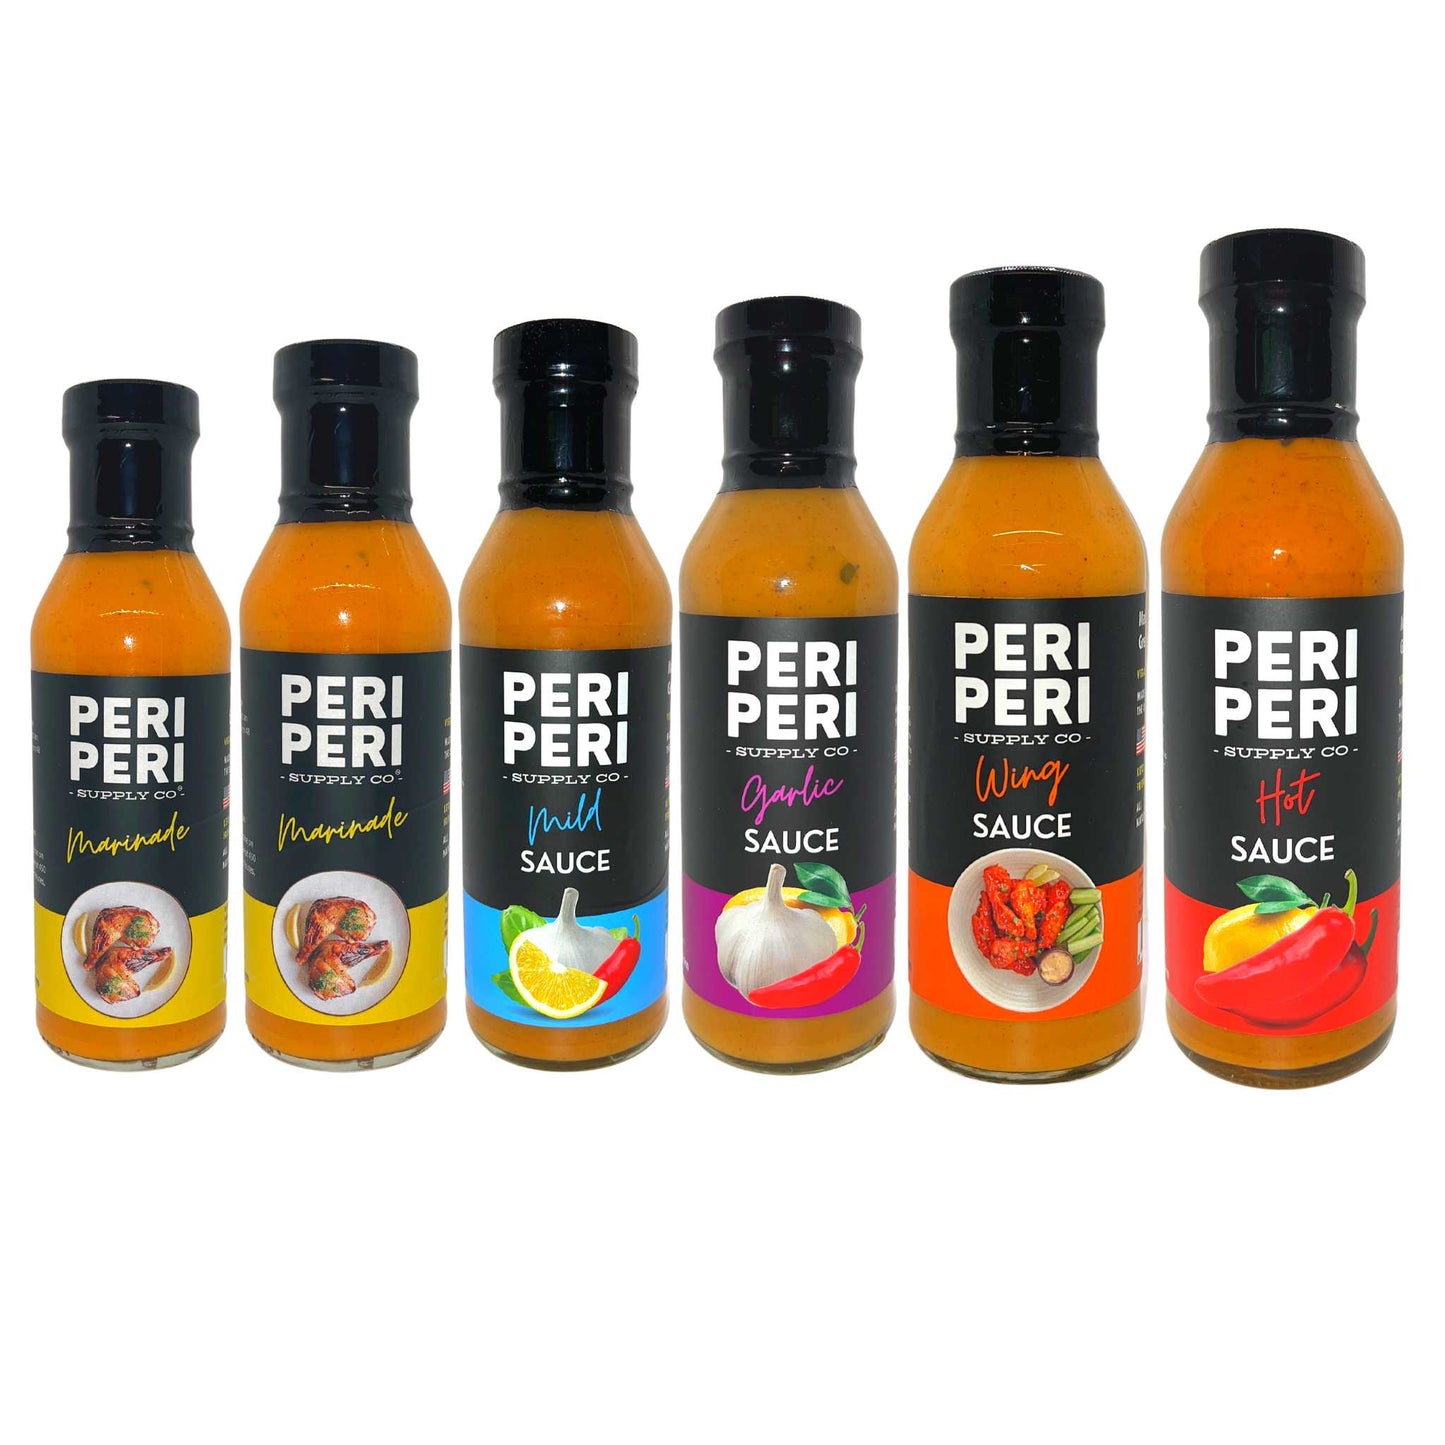 Free Shipping on Peri Peri Sauce!  Get 2 Peri Peri Mariandes, 1 Mild Peri Peri, 1 Garlic Peri Peri, 1 Peri Peri Wing and 1 Peri Peri Hot Sauce